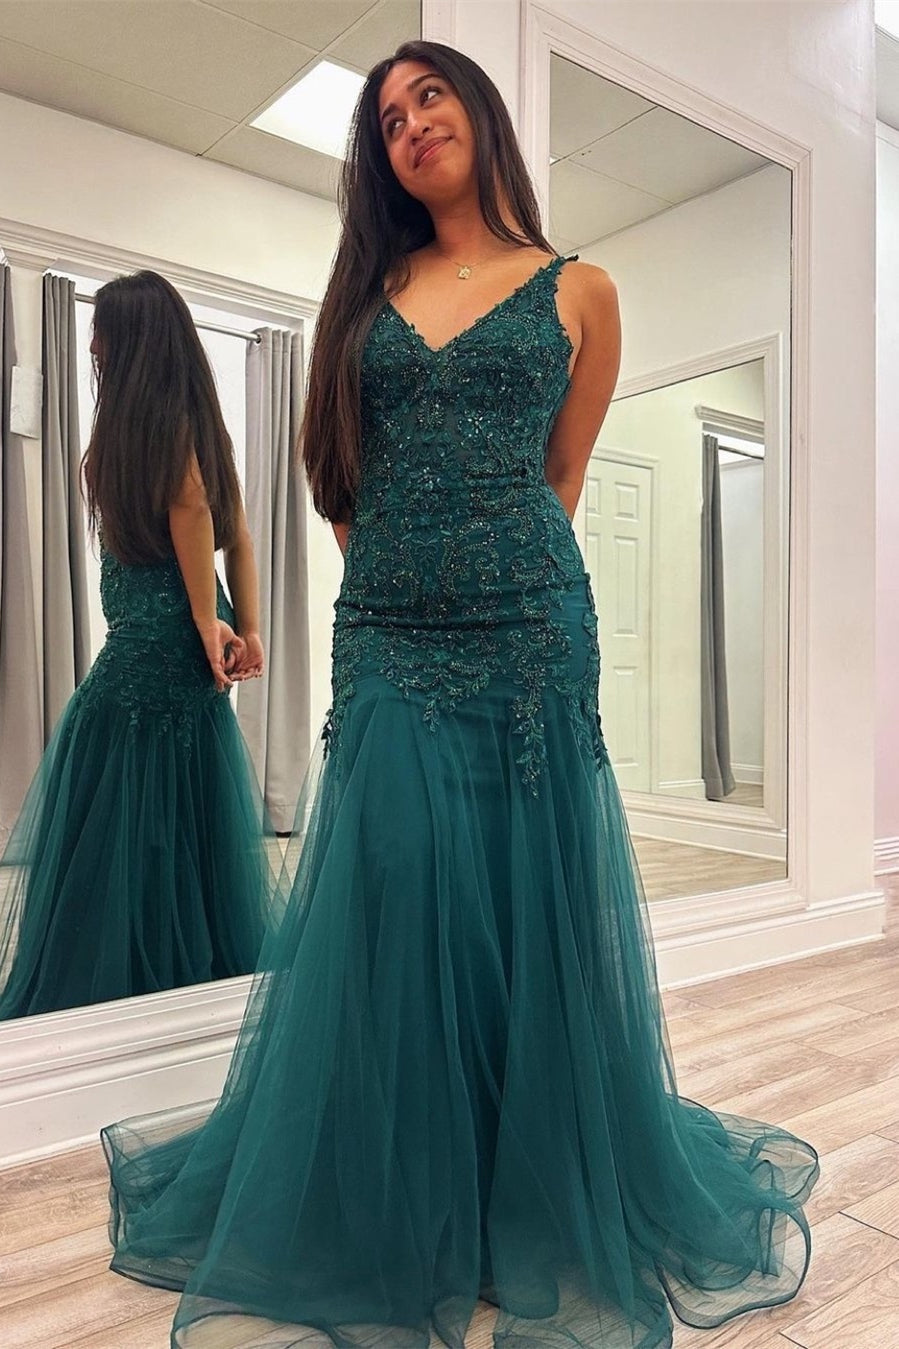 Kali |Peacock Mermaid V-Neck Appliques Tulle Long Prom Dress